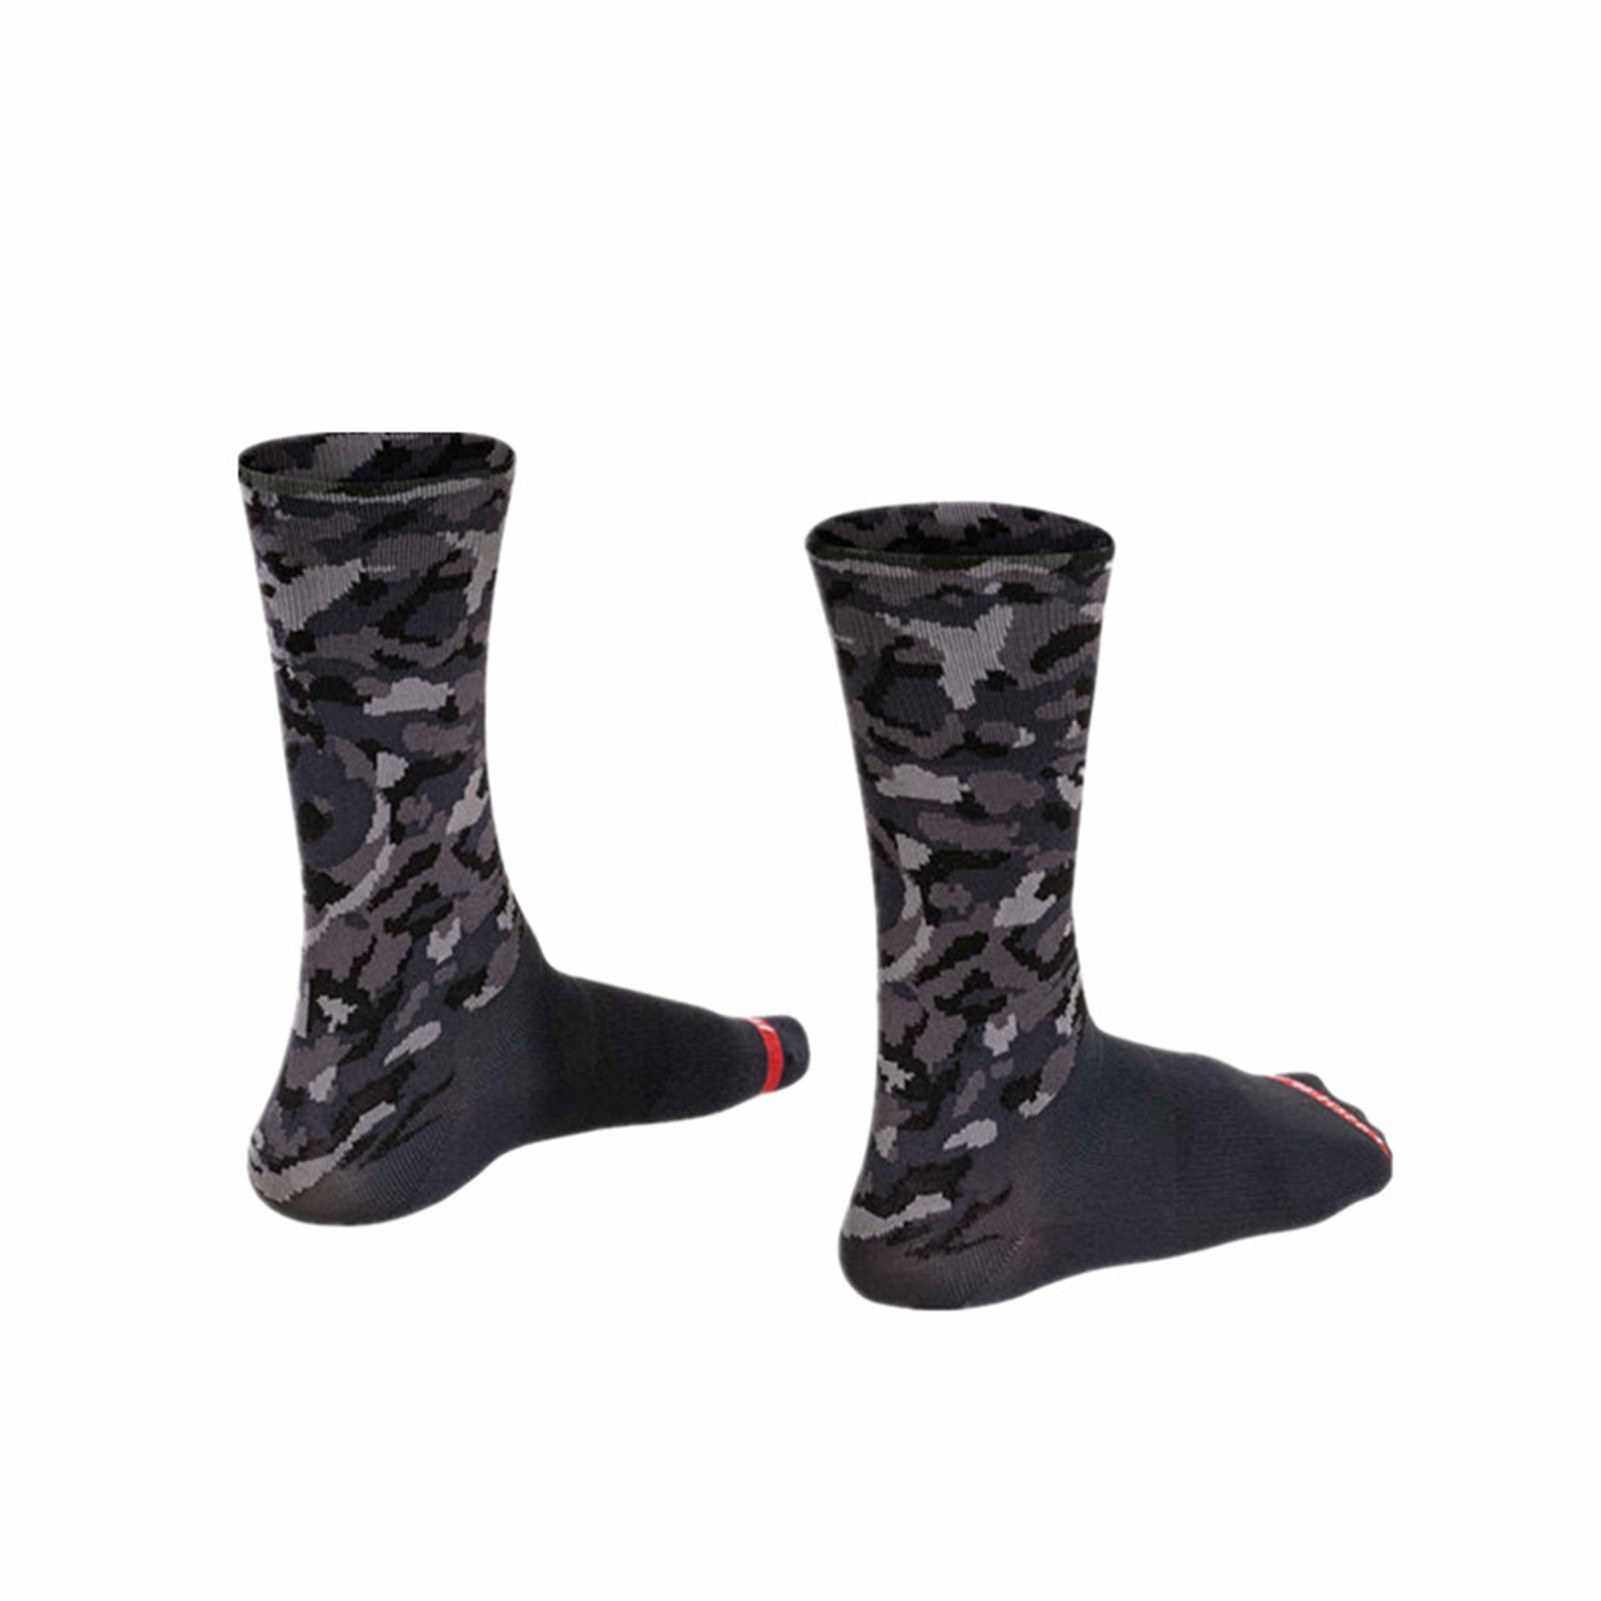 BEST SELLER Outdoor Sports Cycling Socks Compression Stretch Socks Breathable Bike Socks for Men Women (Grey)